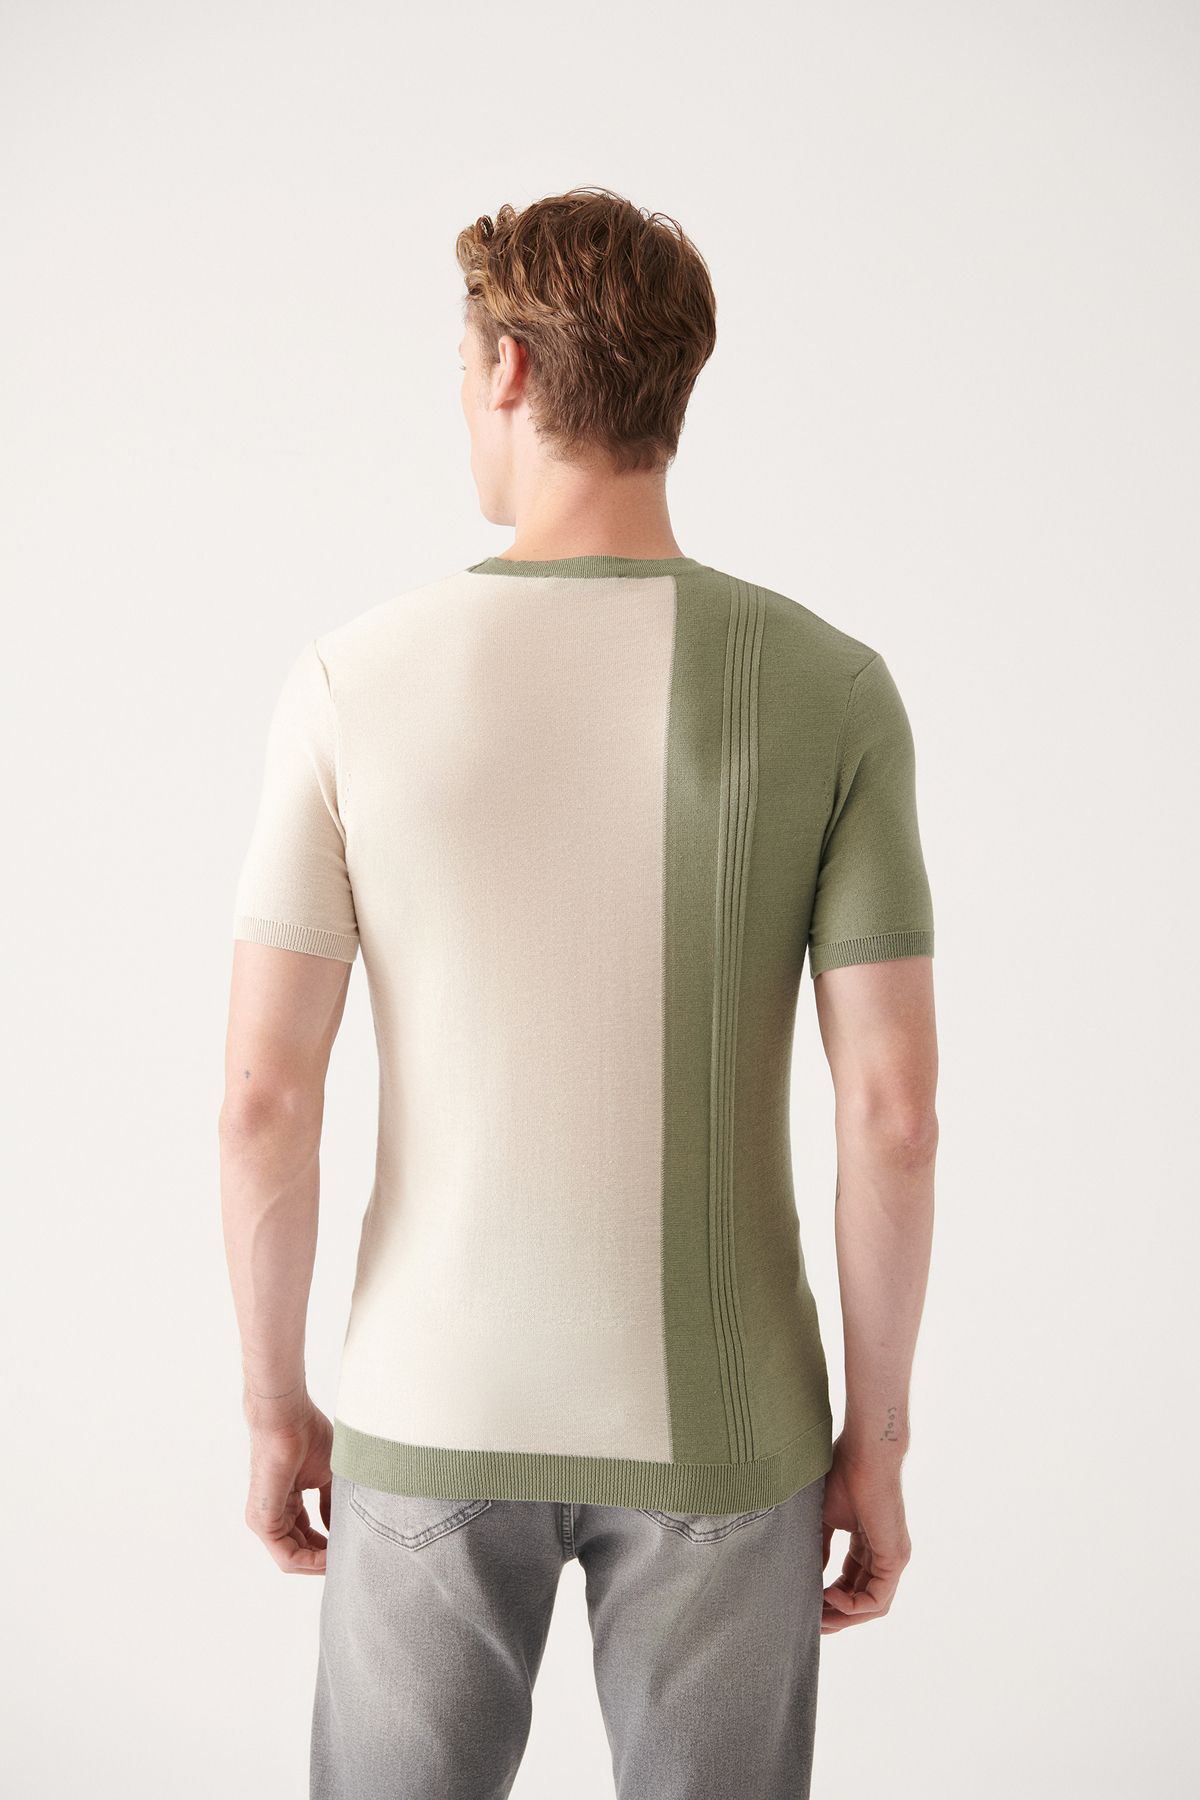 Avva تی شرت بافتنی برش معمولی مردانه یقه سبز آبی بلوک رنگی آجدار با تناسب استاندارد A31Y5123